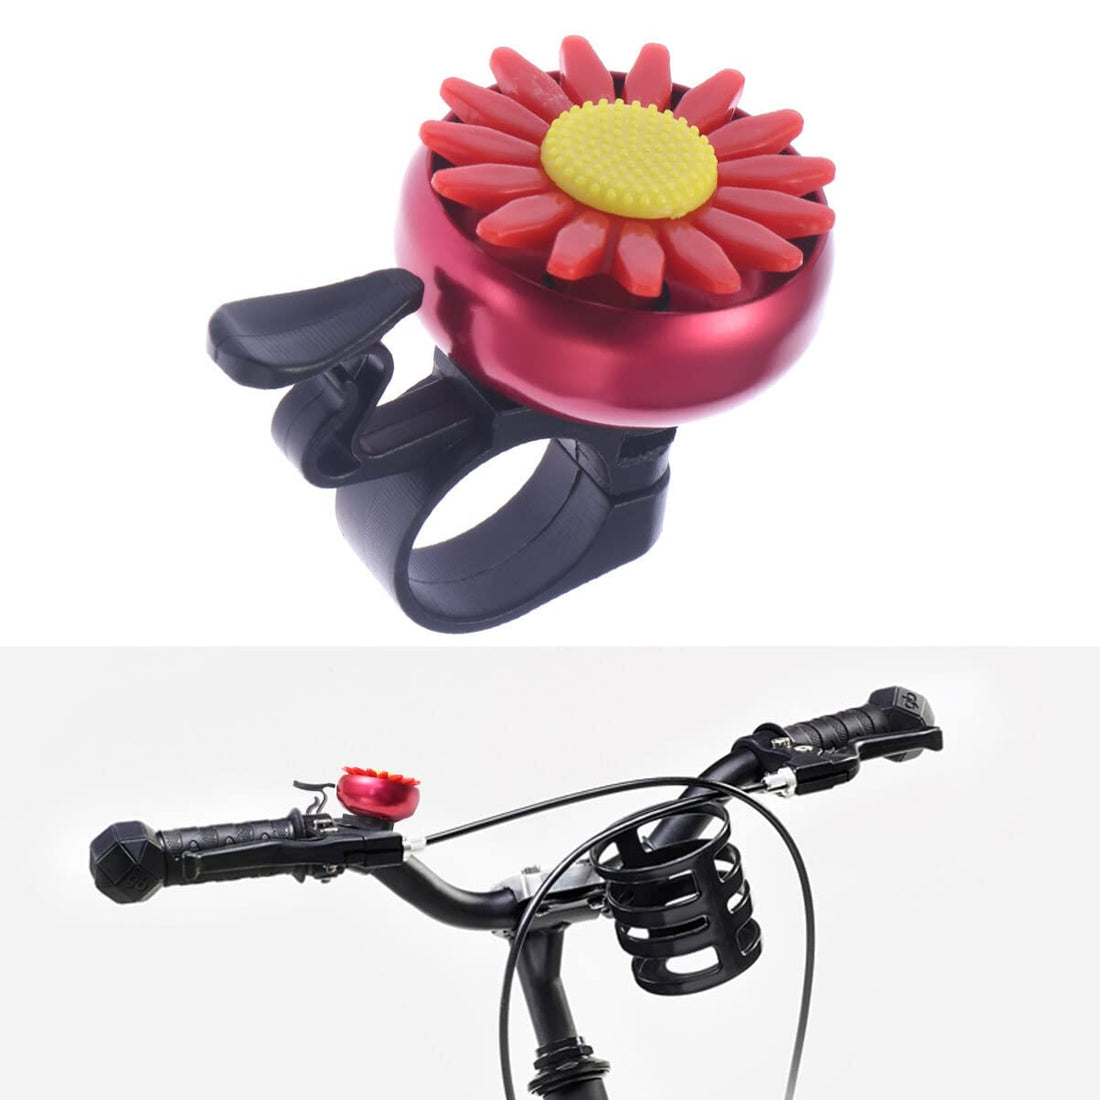 VANZACK Cycling Handlebars Bell Aluminum Alloy Bicycle Bell Loud Crisp Sound Bike Horn Sunflower Bike Bell